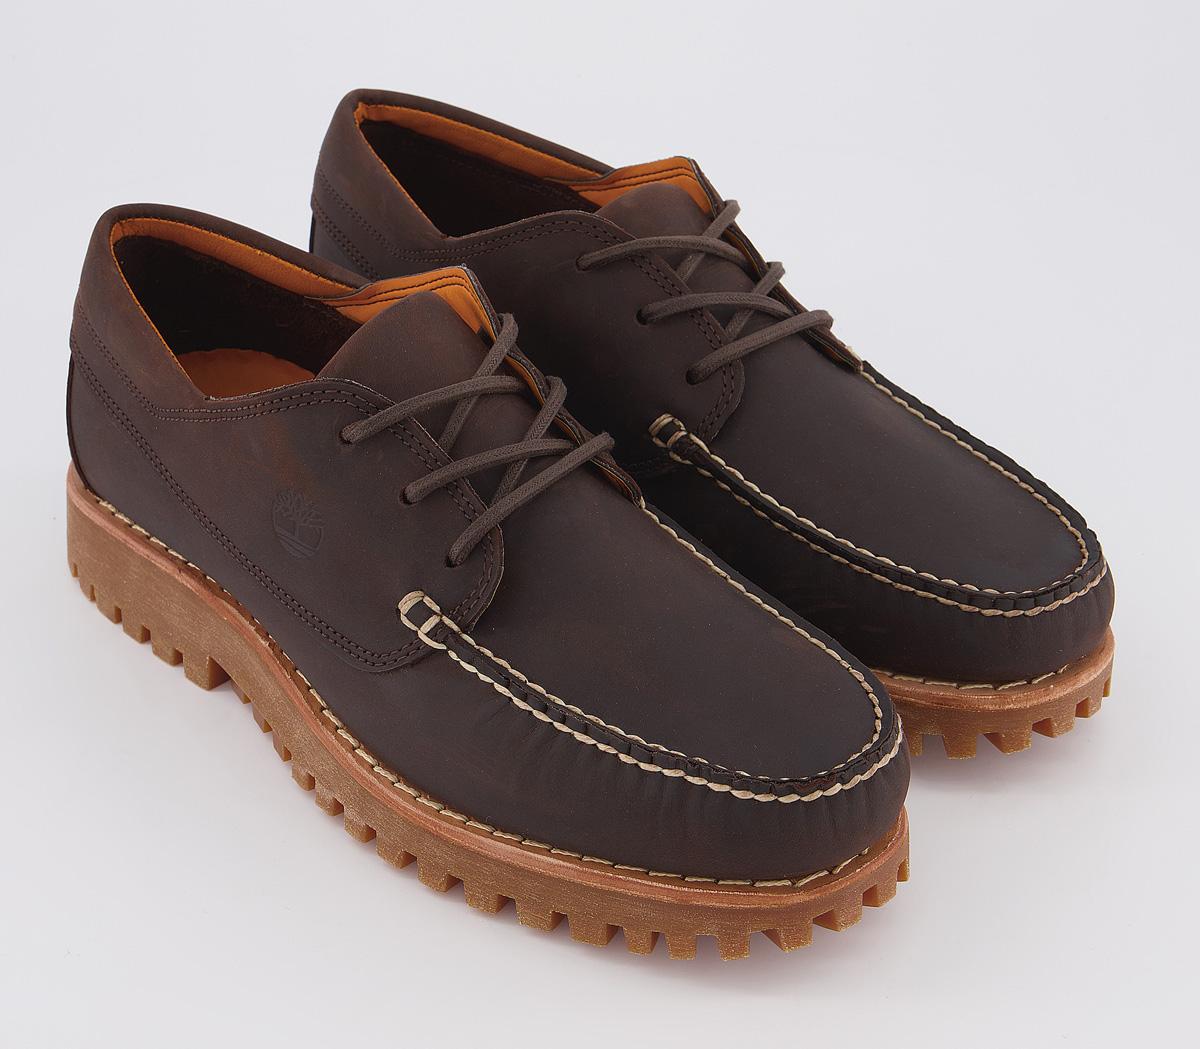 Timberland Jackson Landing Boat Shoes Dark Brown Full Grain - Men’s Boots